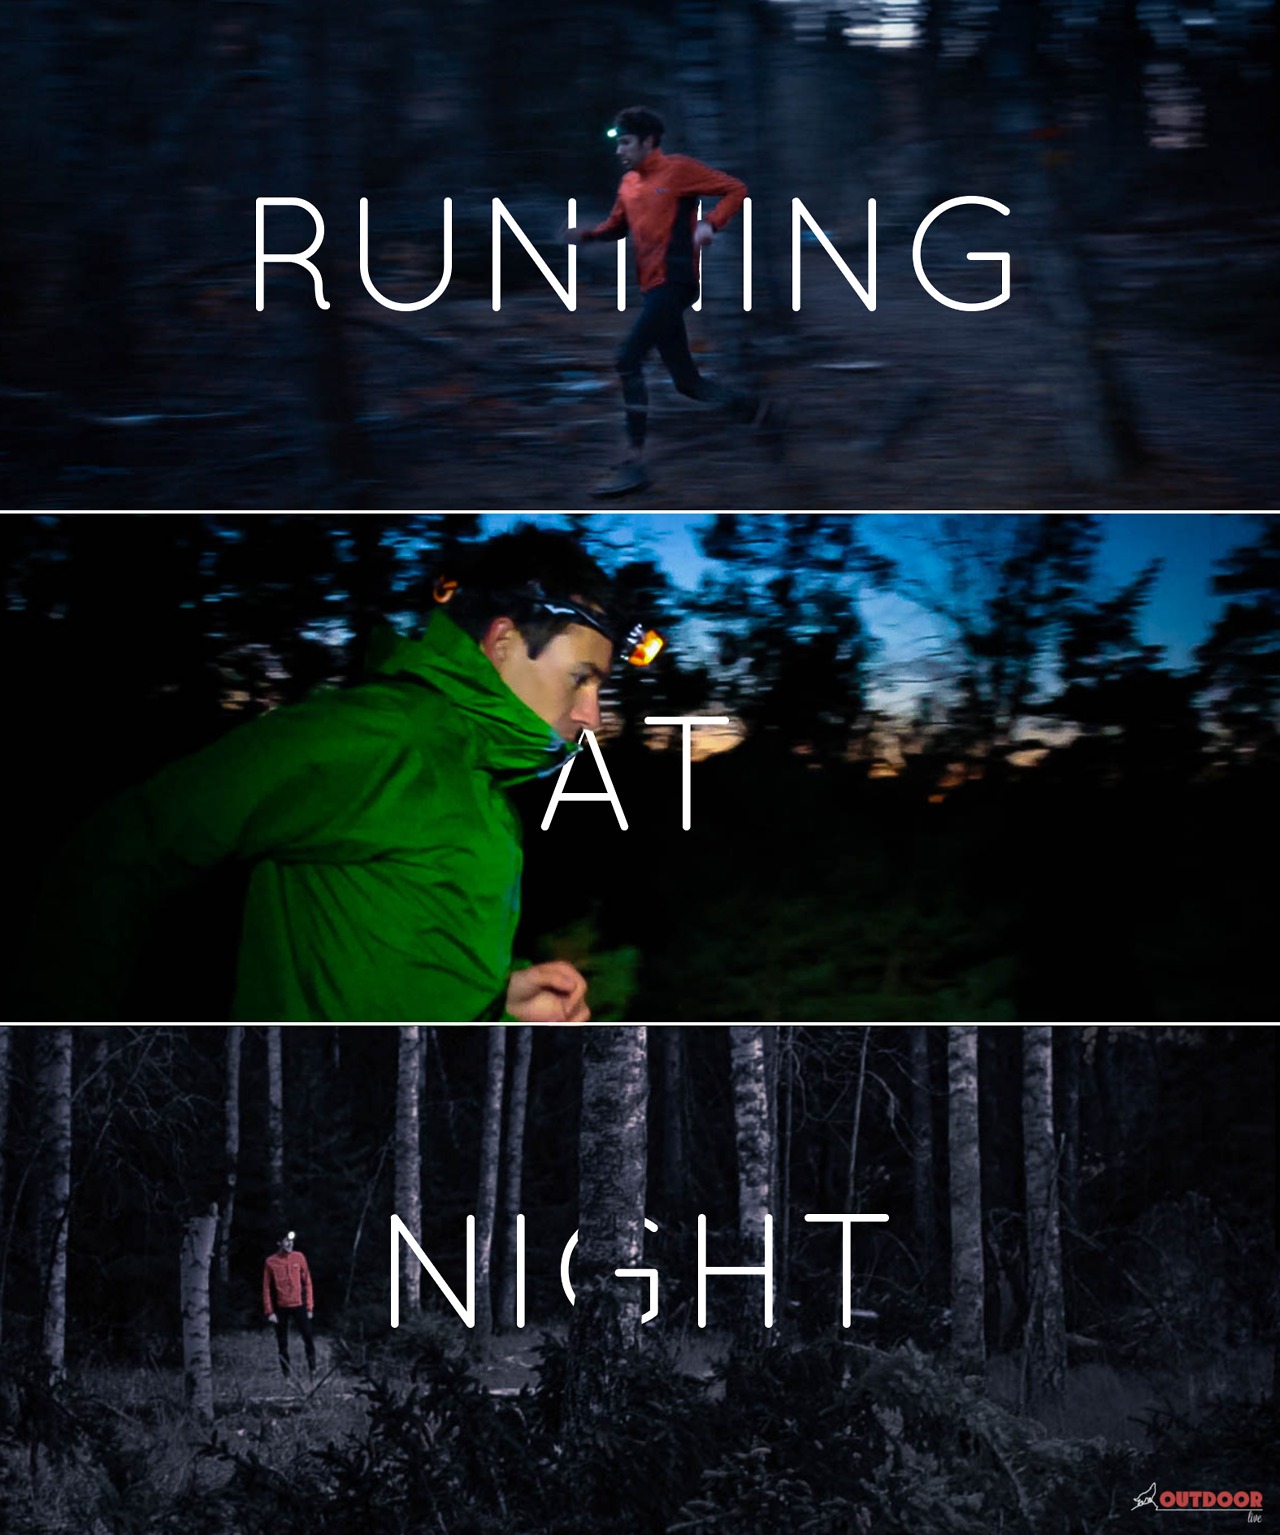 runing by night